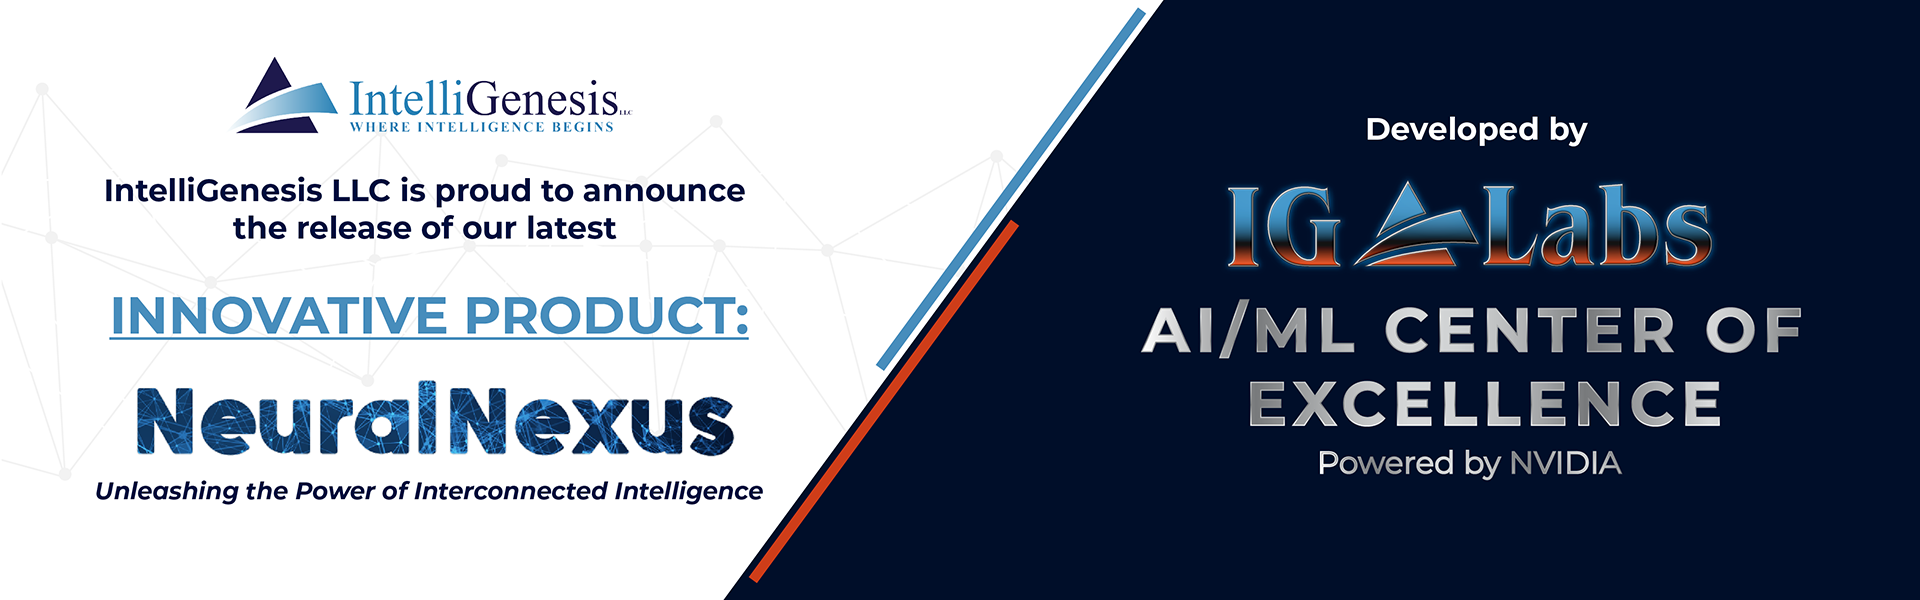 Banner announcing the release of IntelliGenesis's product, NeuralNexus, an AI/ML driven platform.